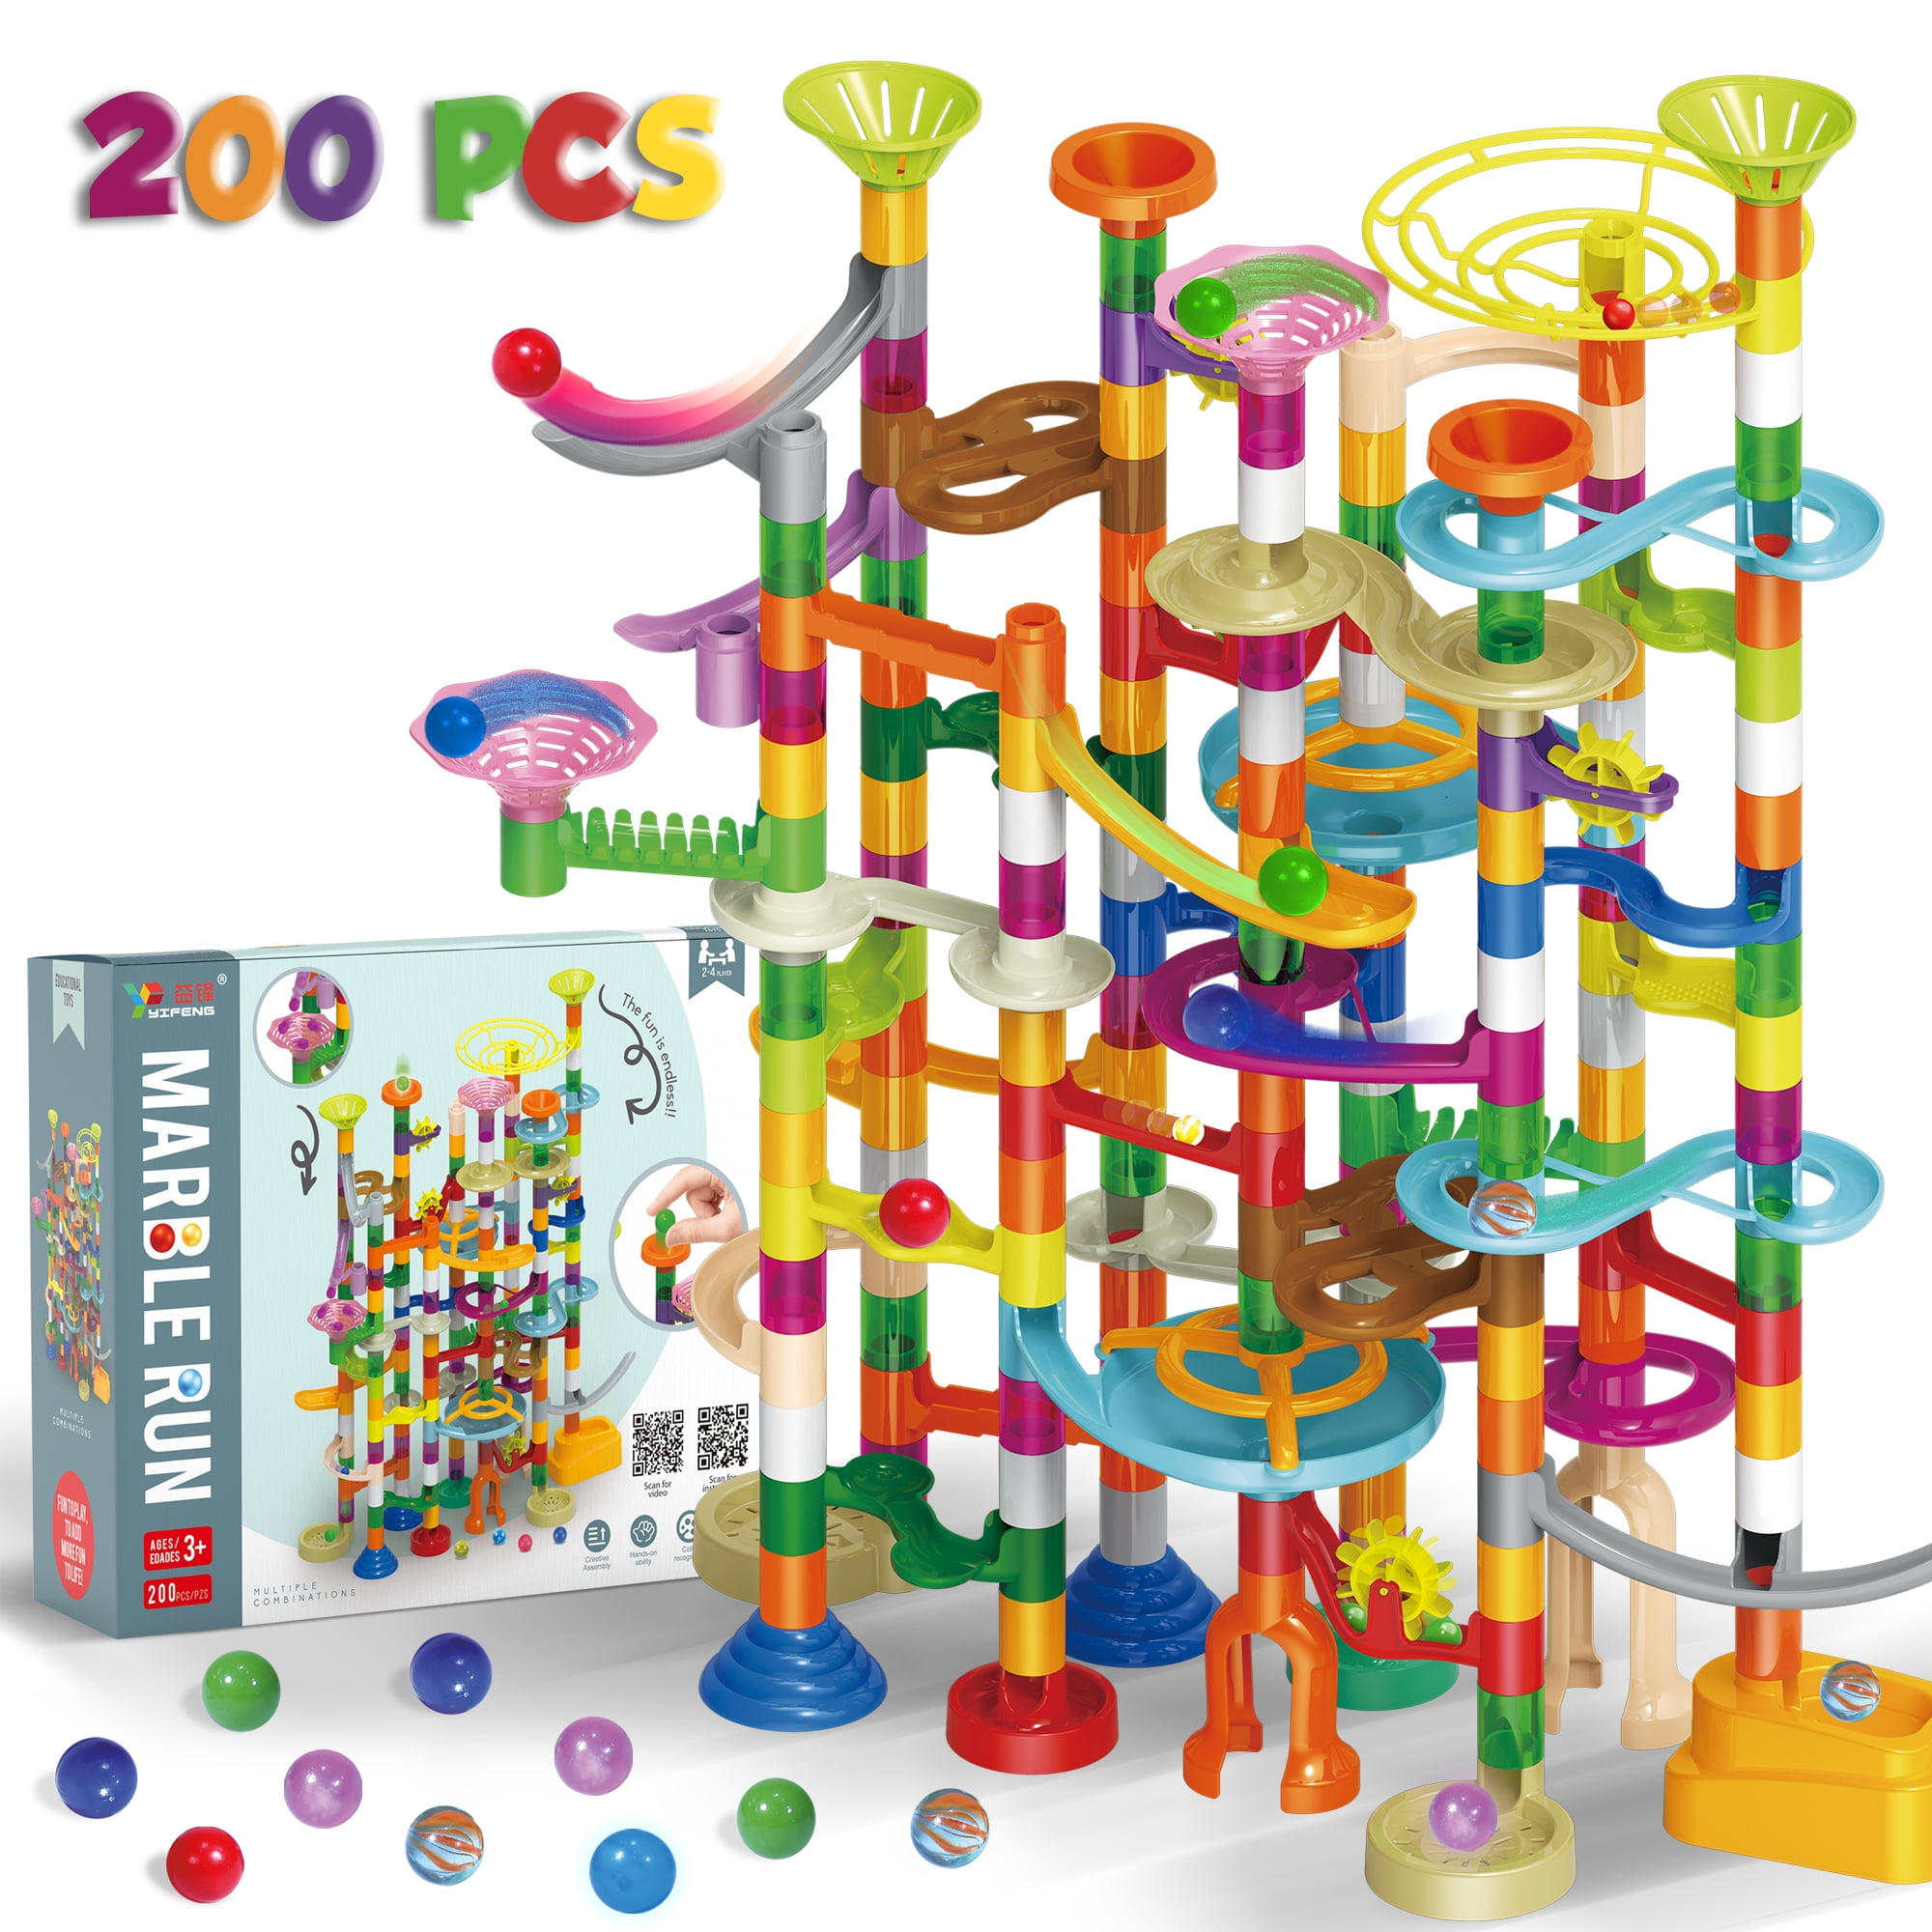 JoyX Marble Run 200 Pcs Educational Toy Set, Construction Building ...